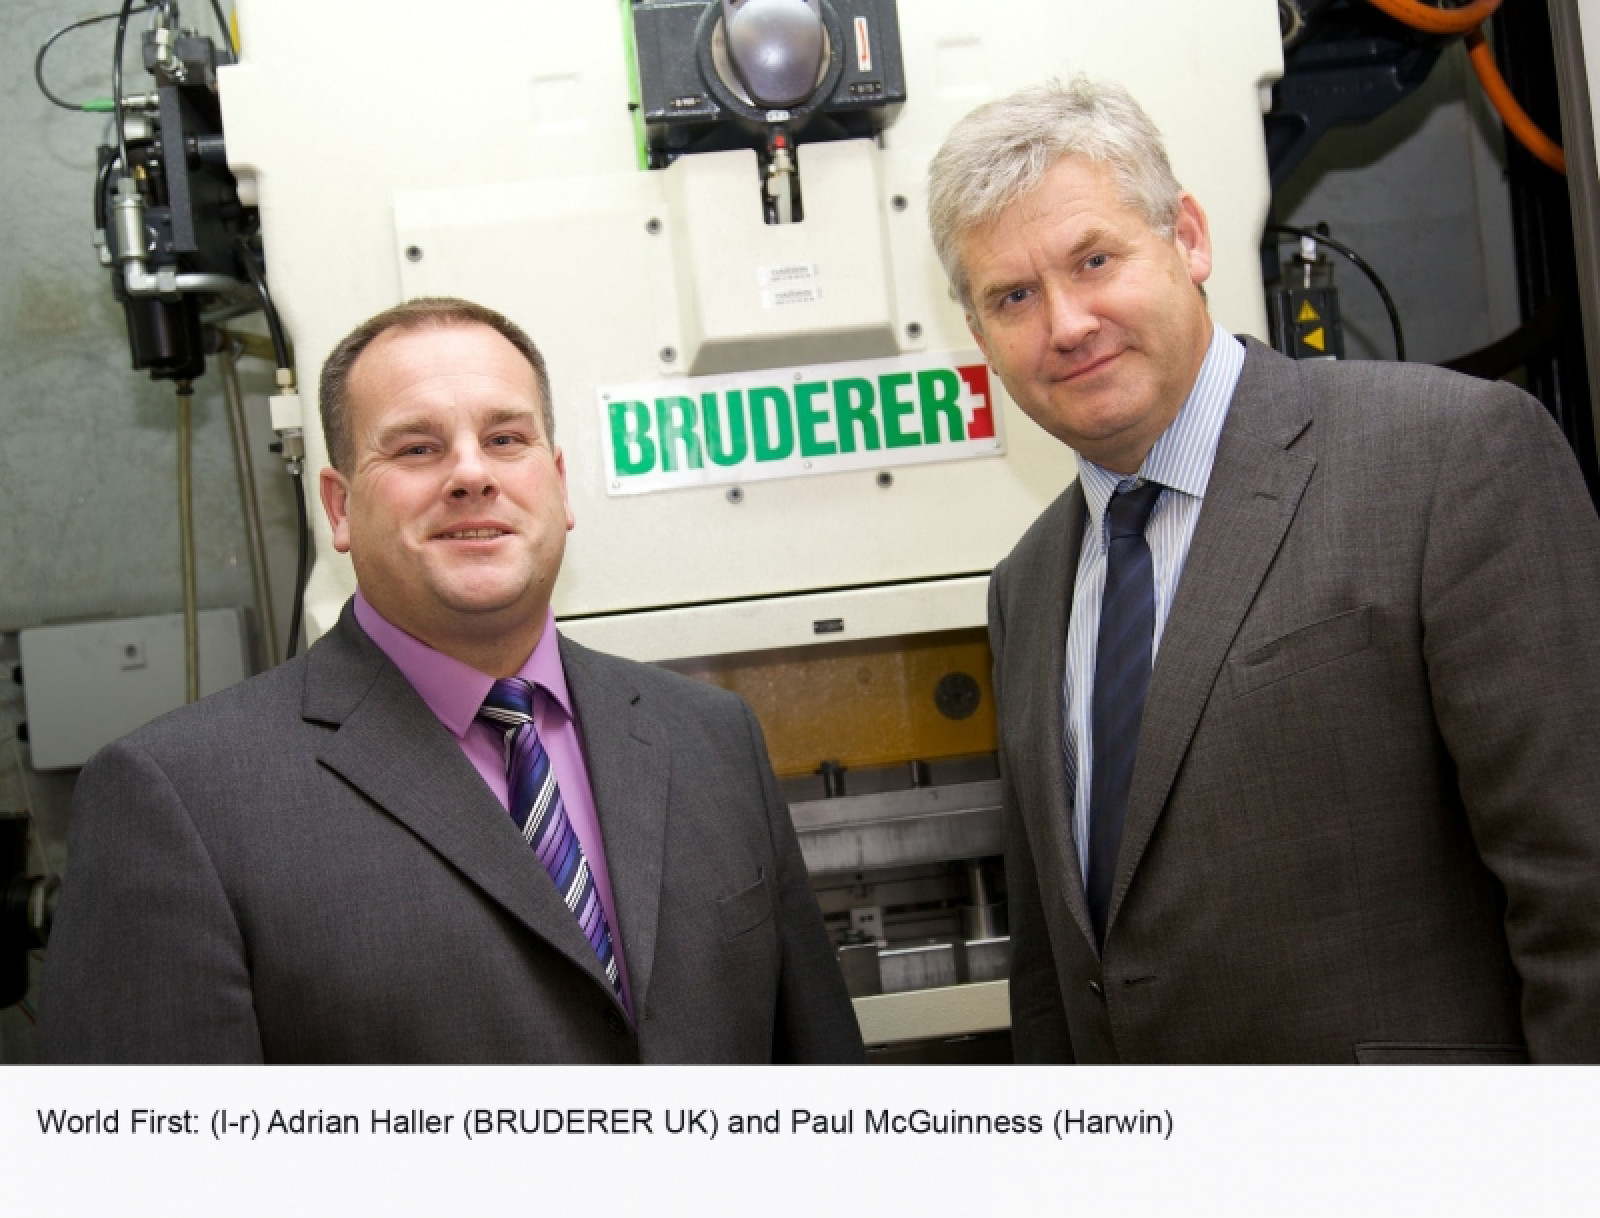 Bruderer UK signs £500,000 Harwin deal at MACH 201...